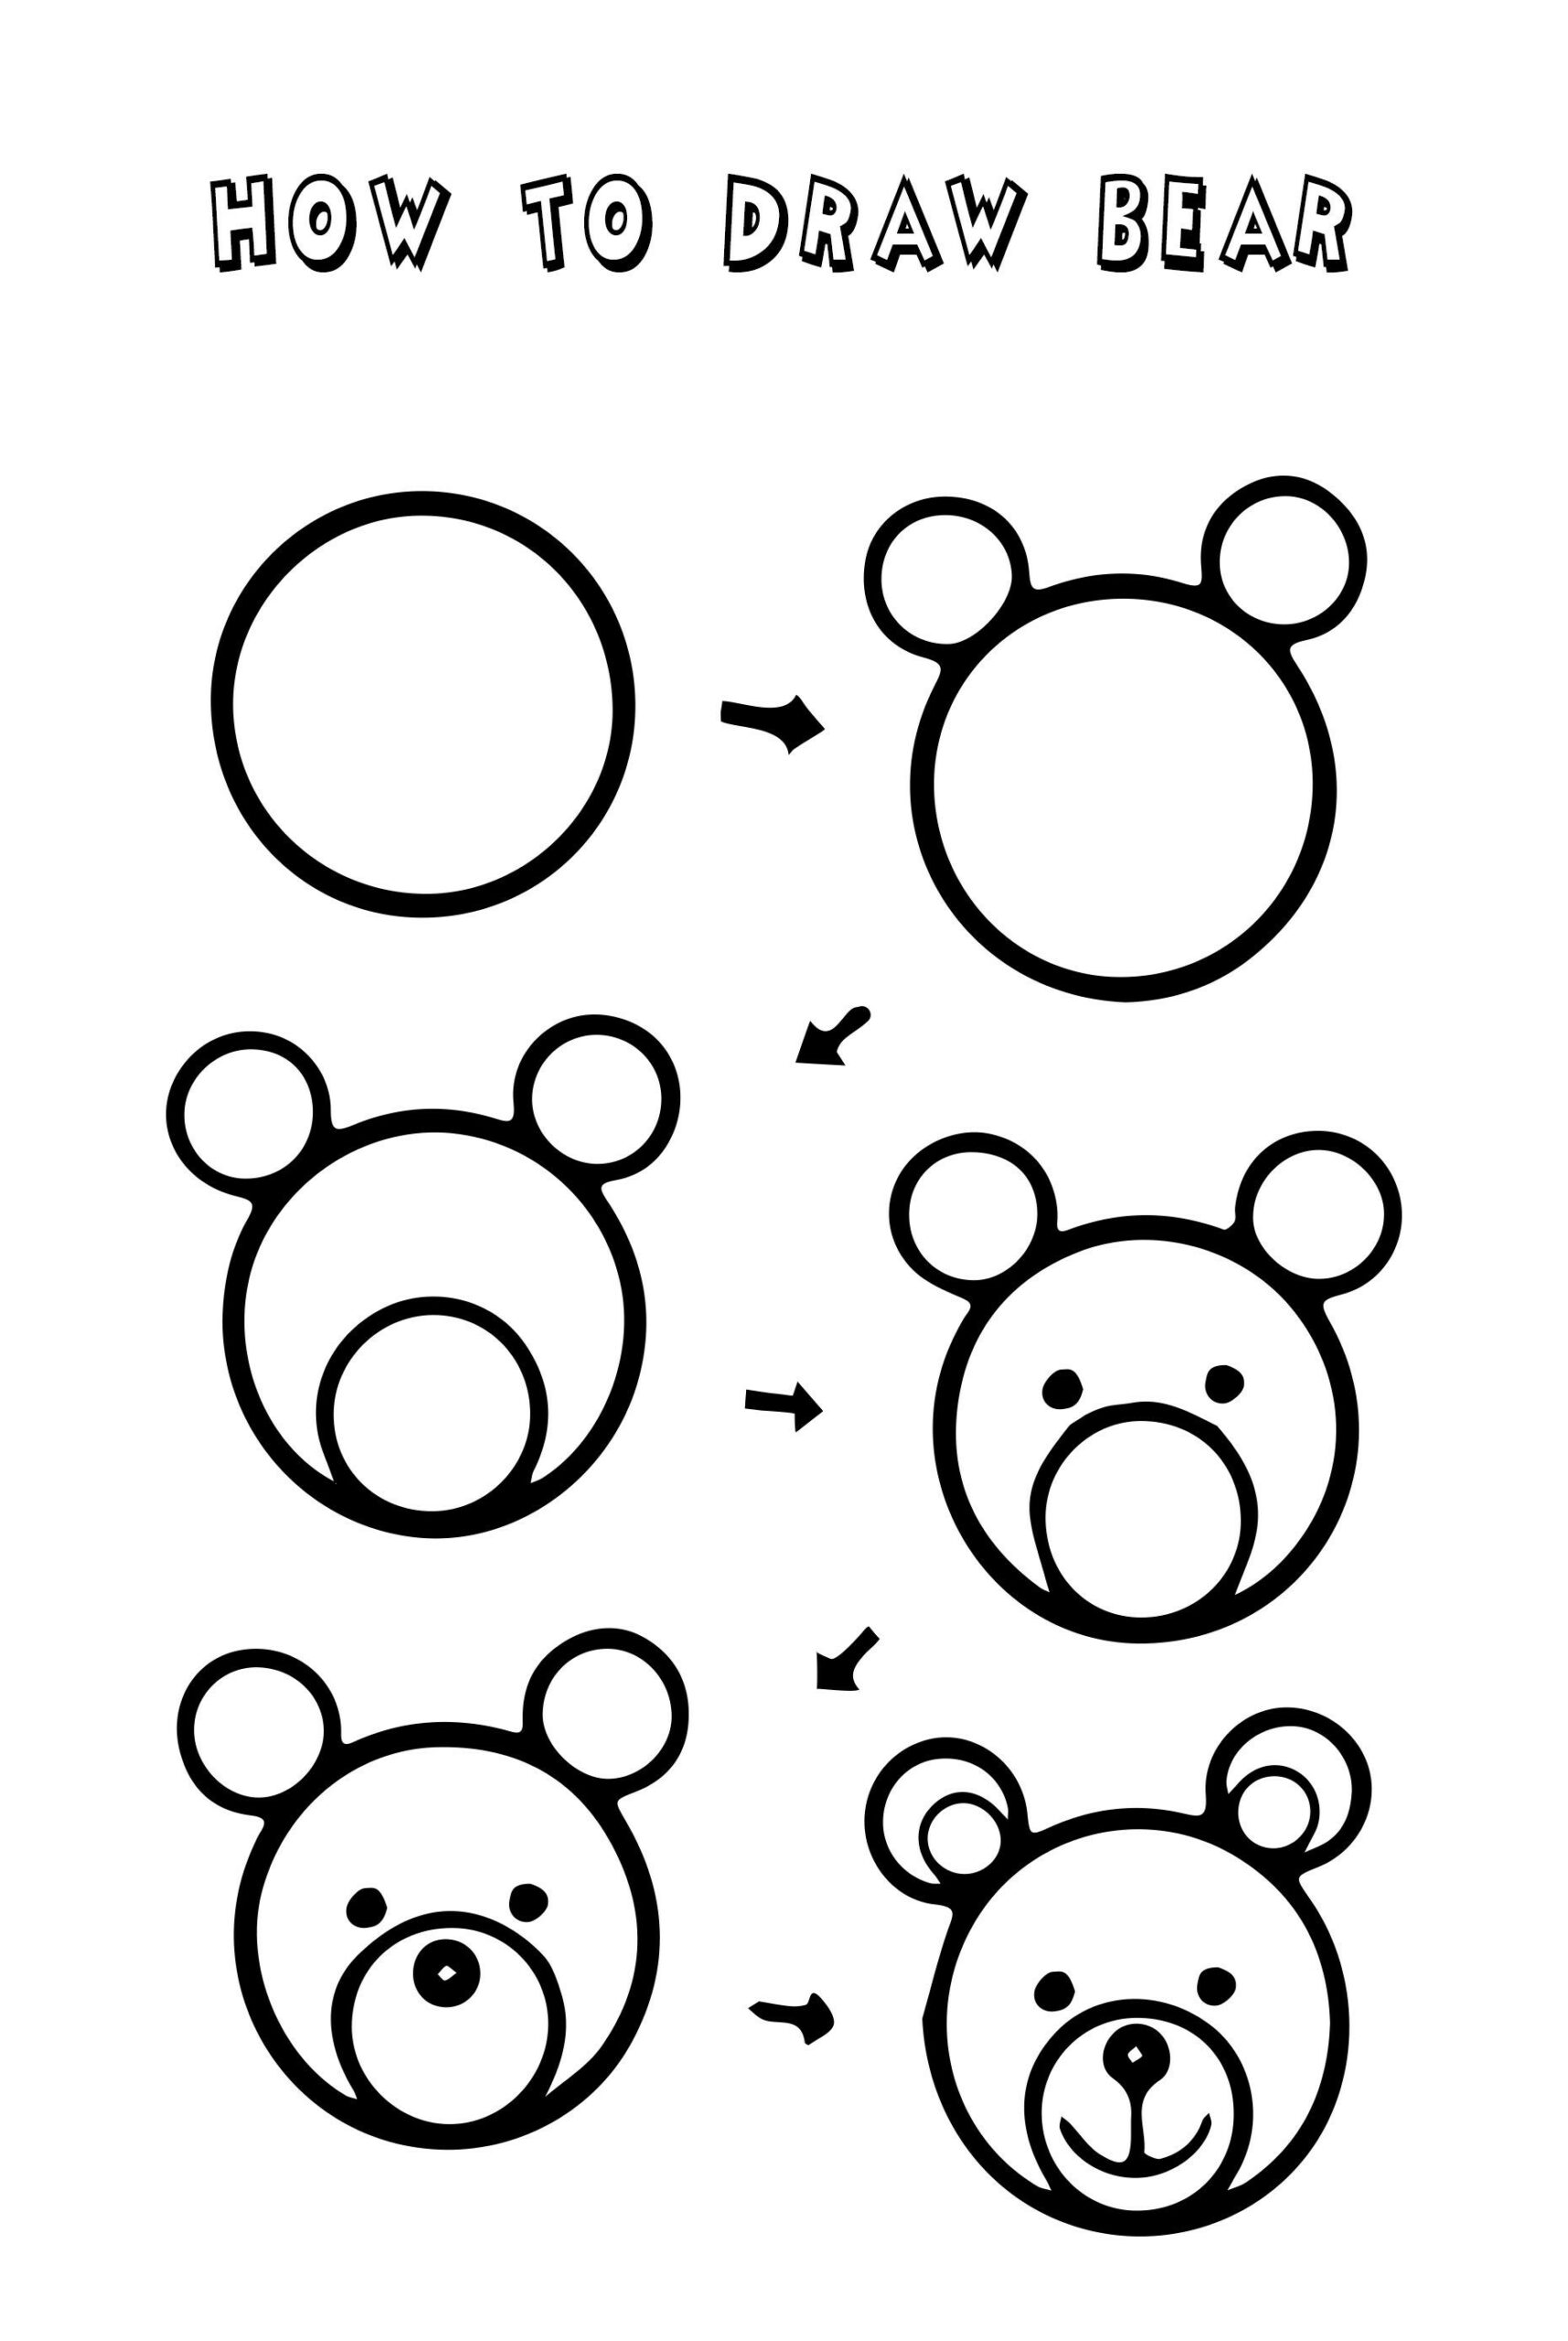 Bear's head Drawing Ideas